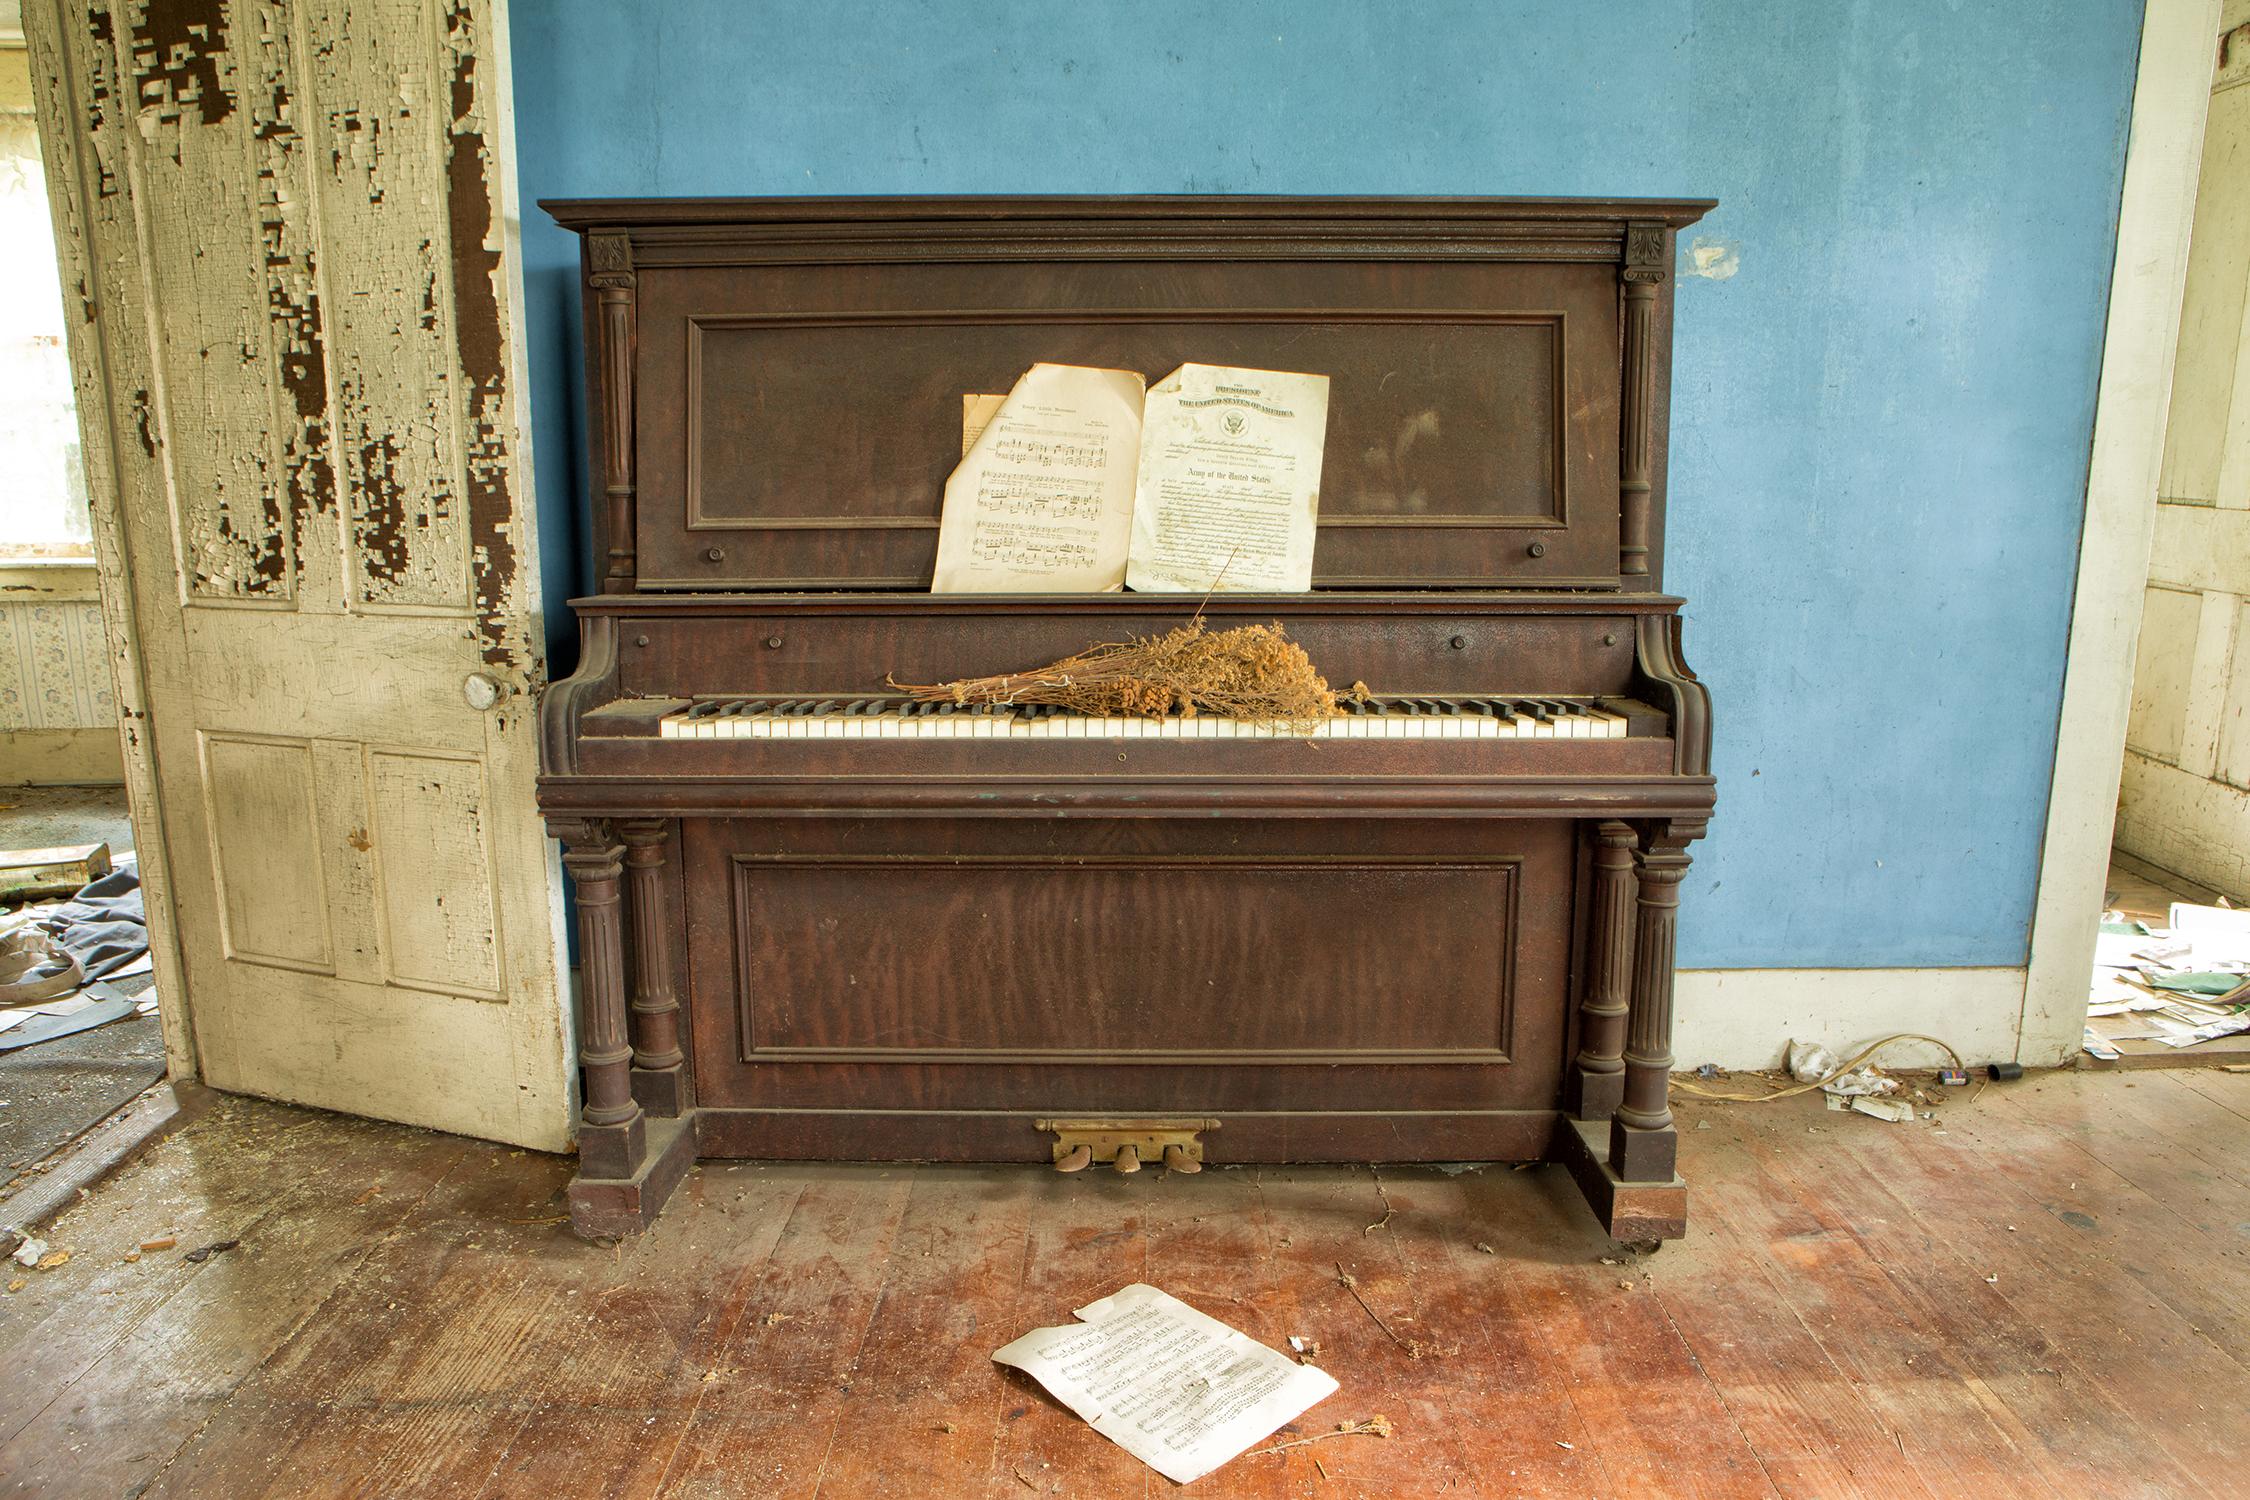 Rebecca Skinner Color Photograph - "Farmhouse Blues", contemporary, abandoned, farmhouse, piano, color photograph